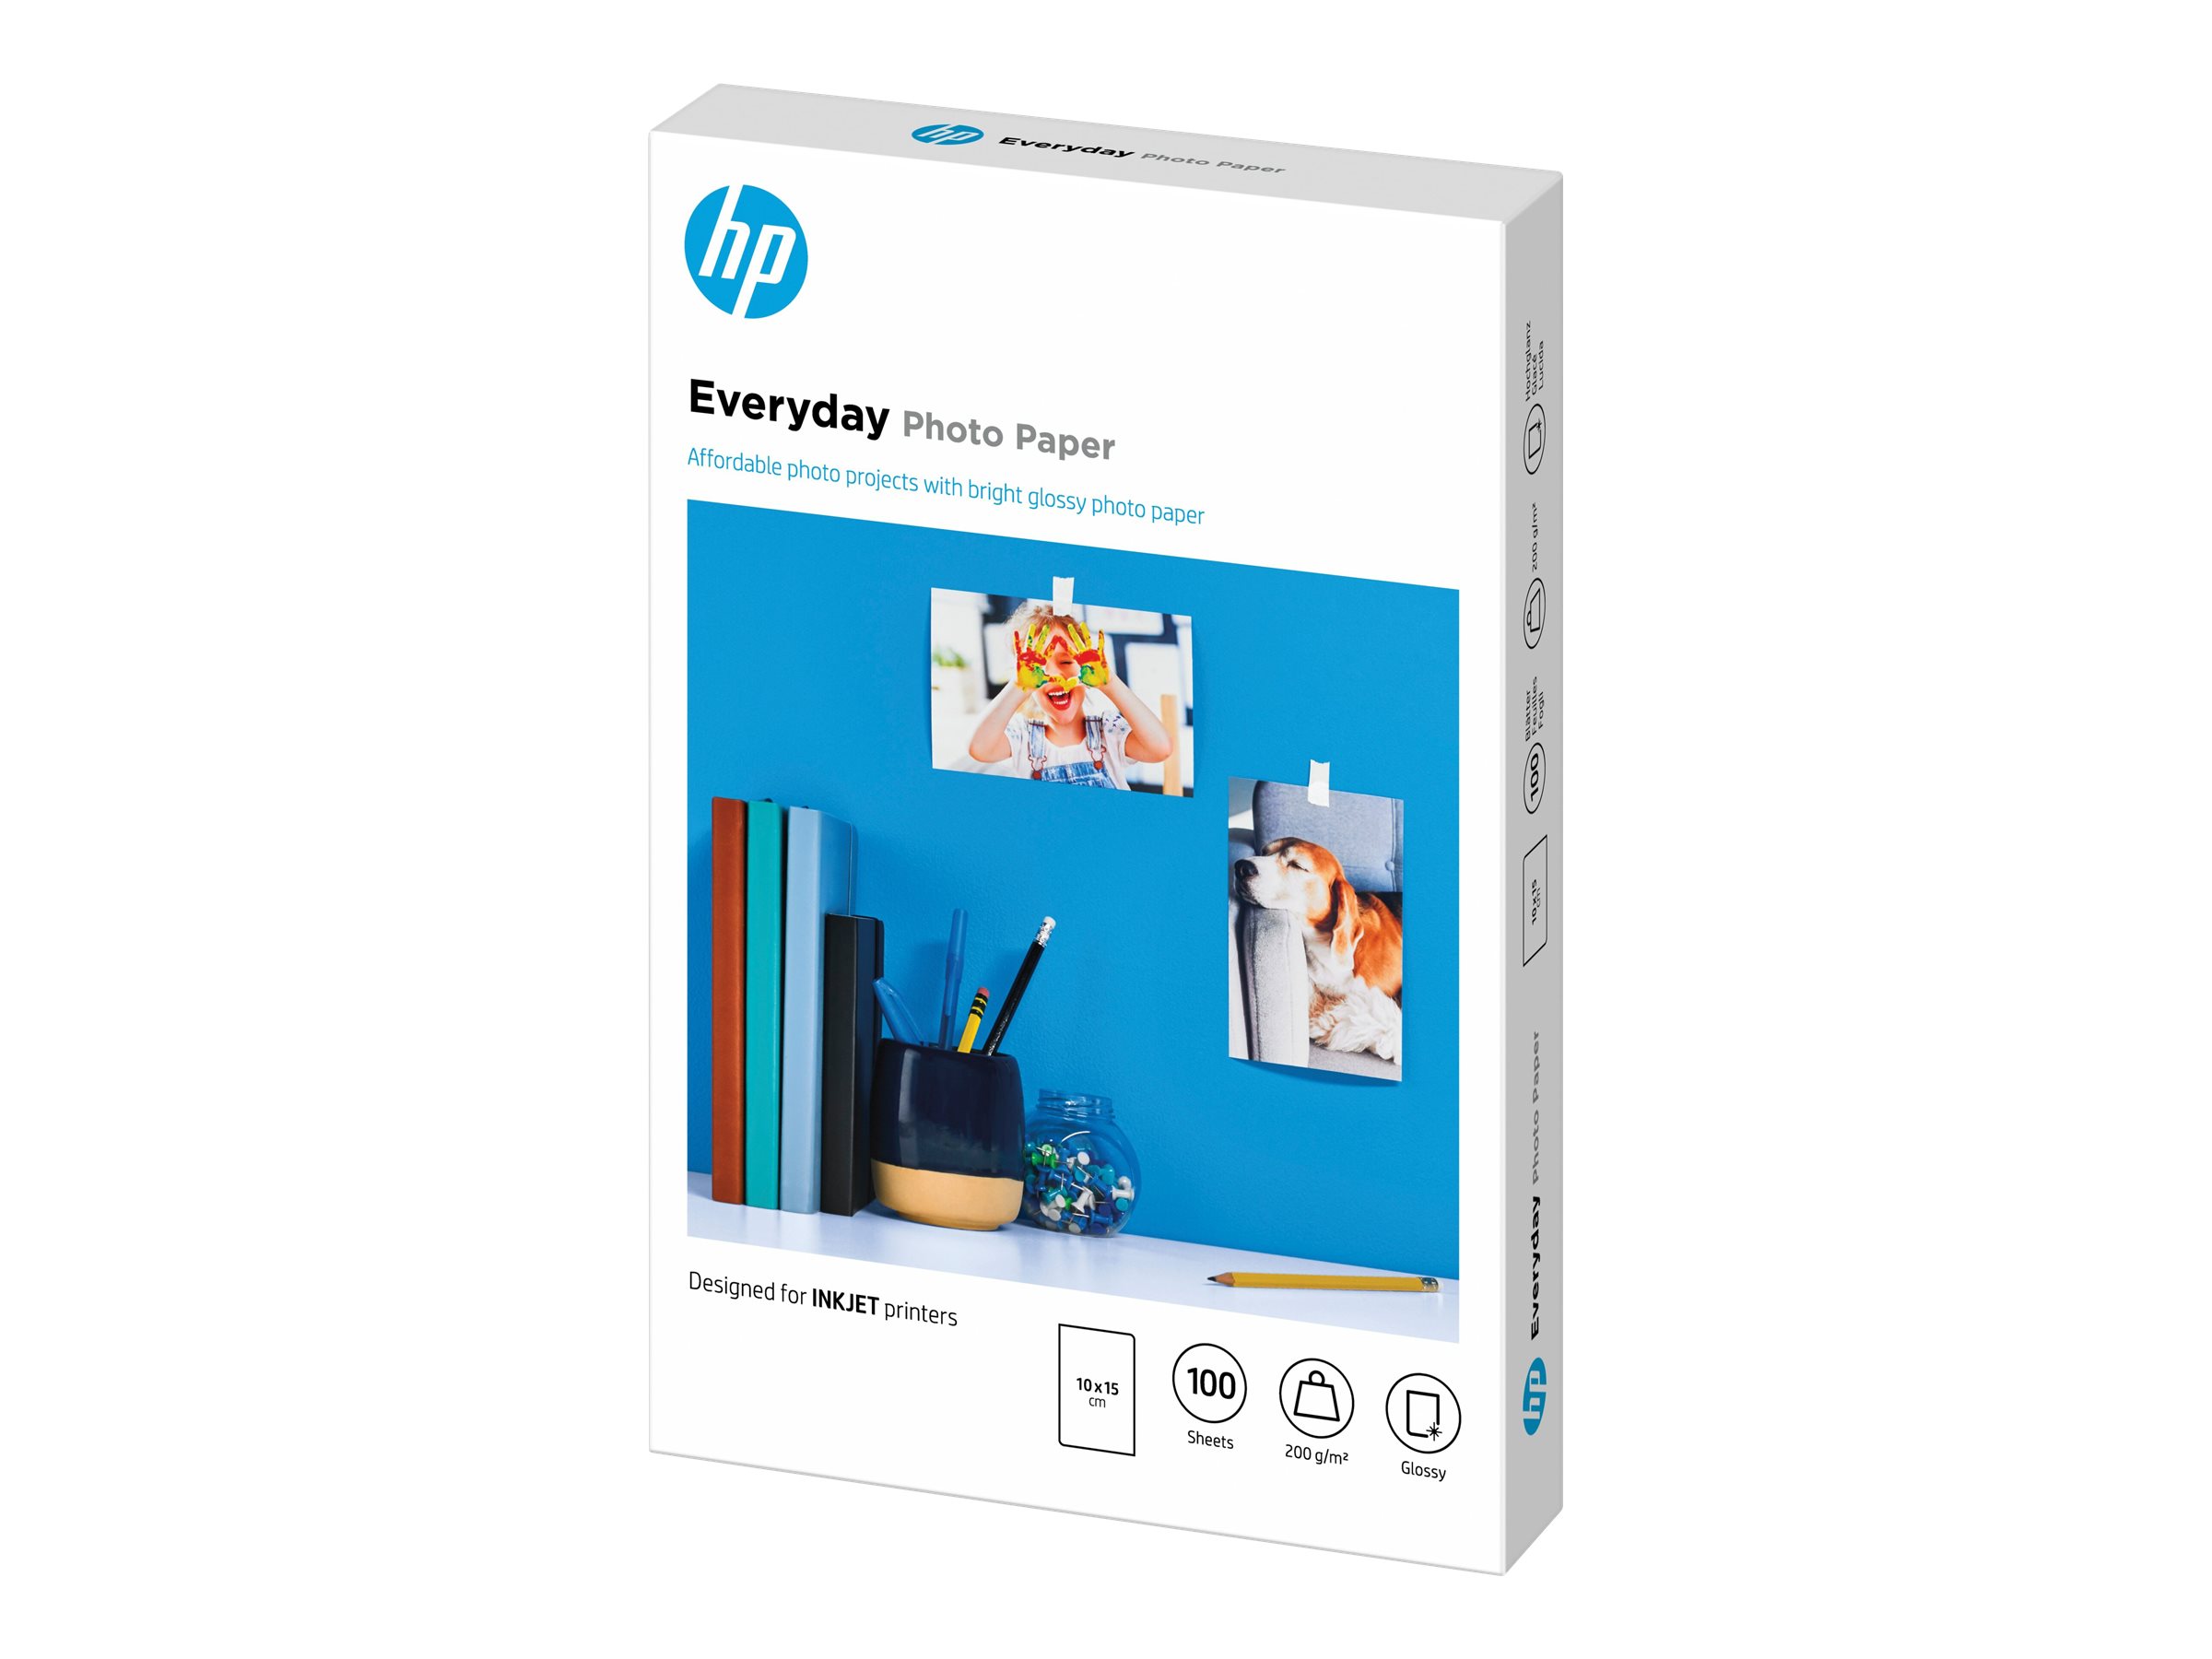 HP Everyday Photo Paper - Glnzend - 8 mil - 100 x 150 mm - 200 g/m - 100 Blatt Fotopapier